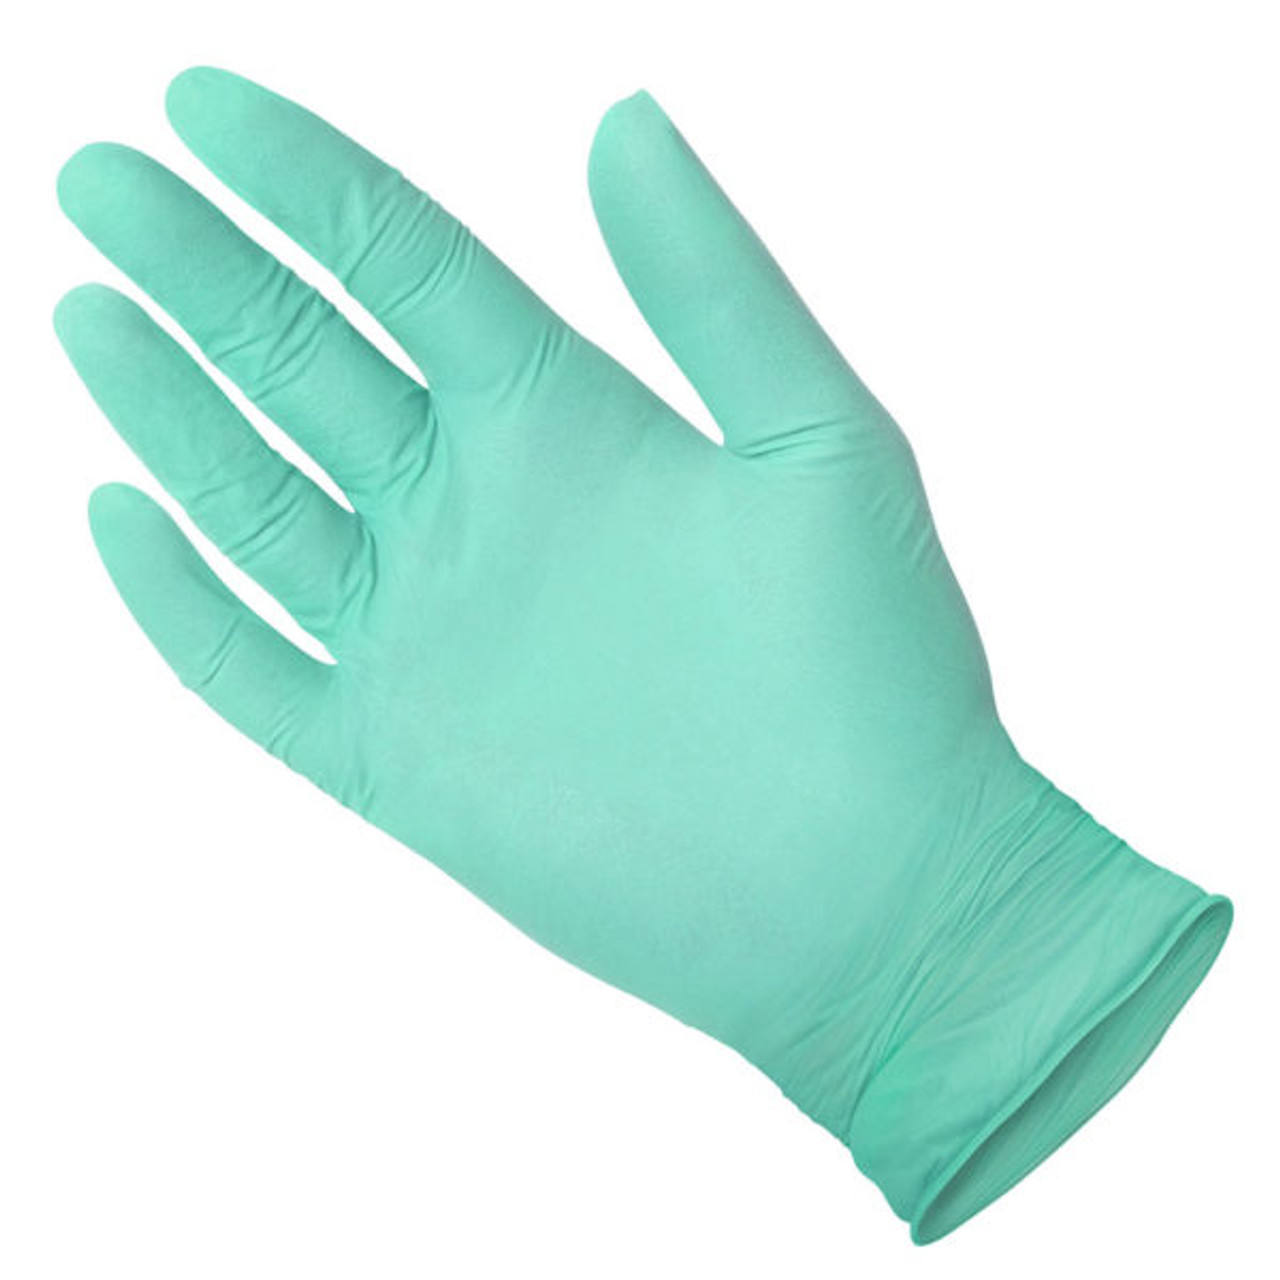 Medgluv Neugrip Latex Exam Glove, Aloe, 6.5mil, Medium 100/bx, 10/cs